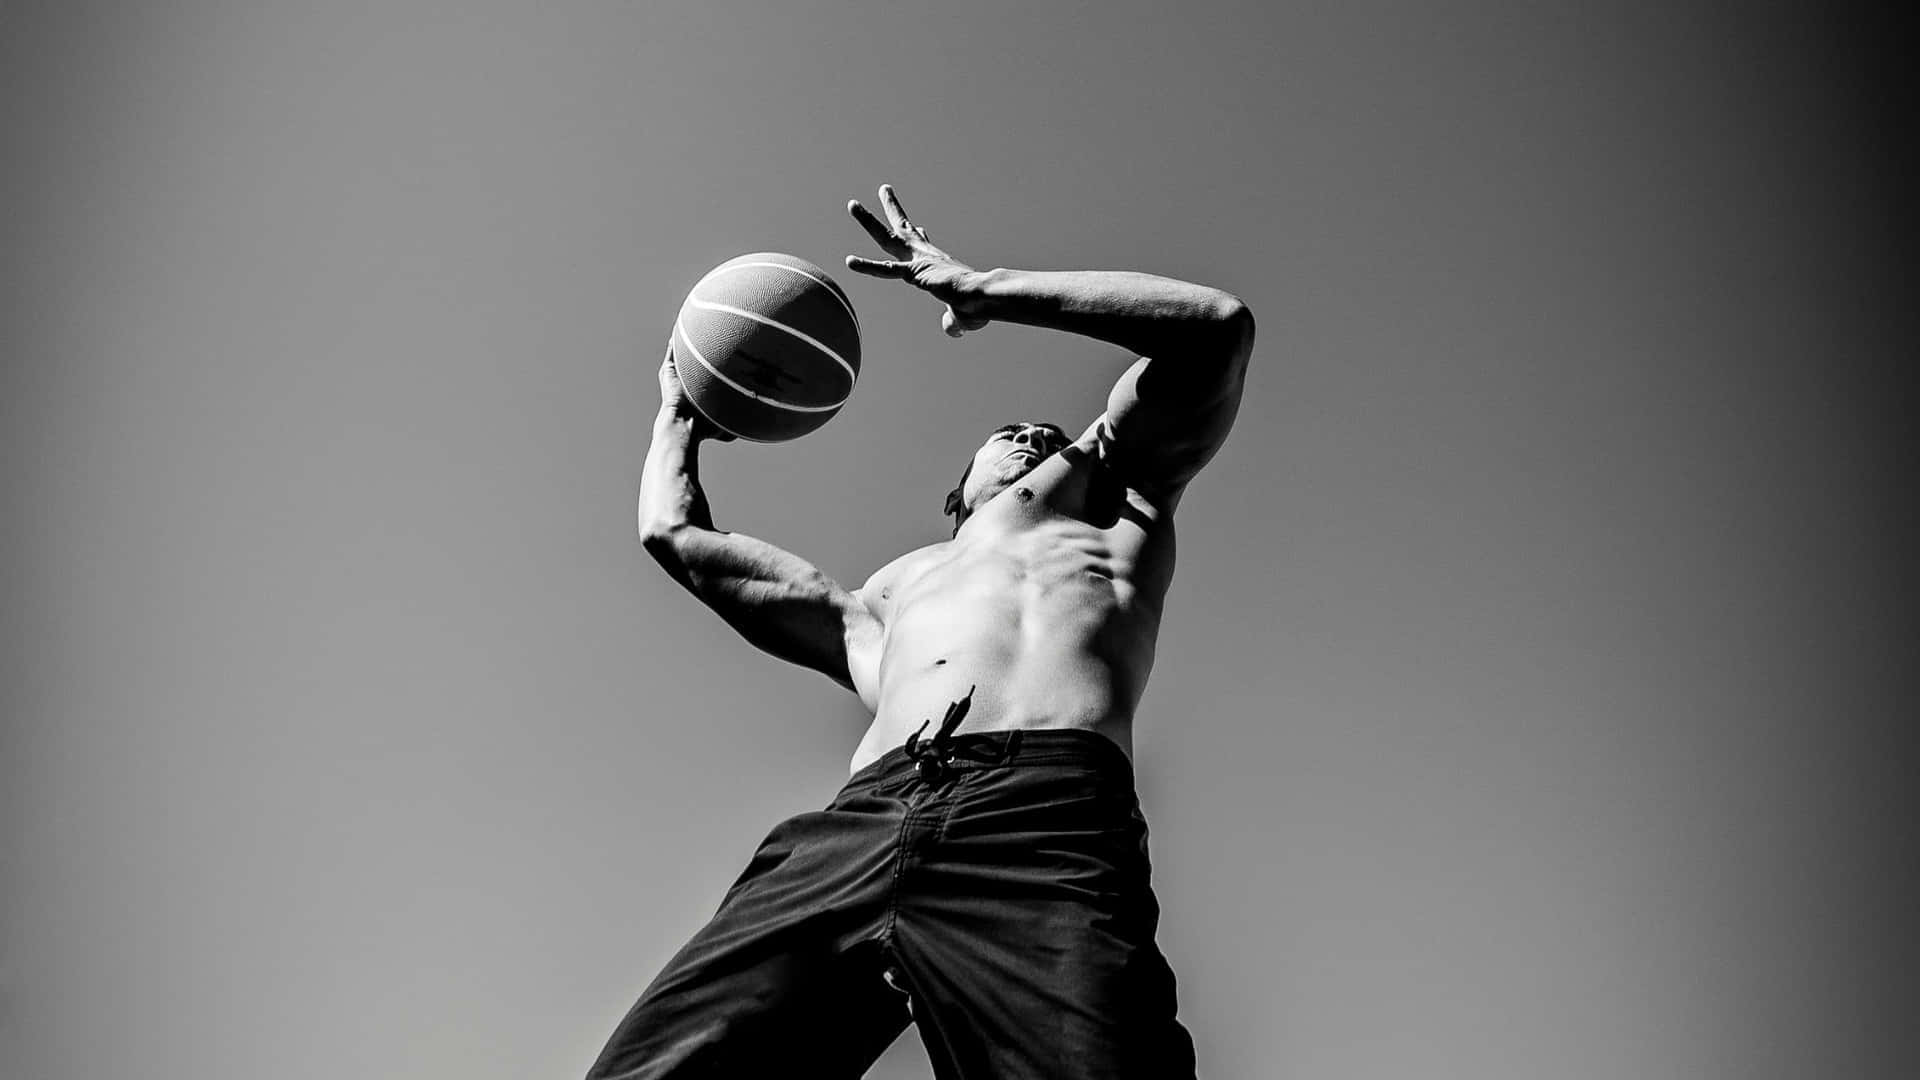 Aesthetics Of A Black Basketball Player